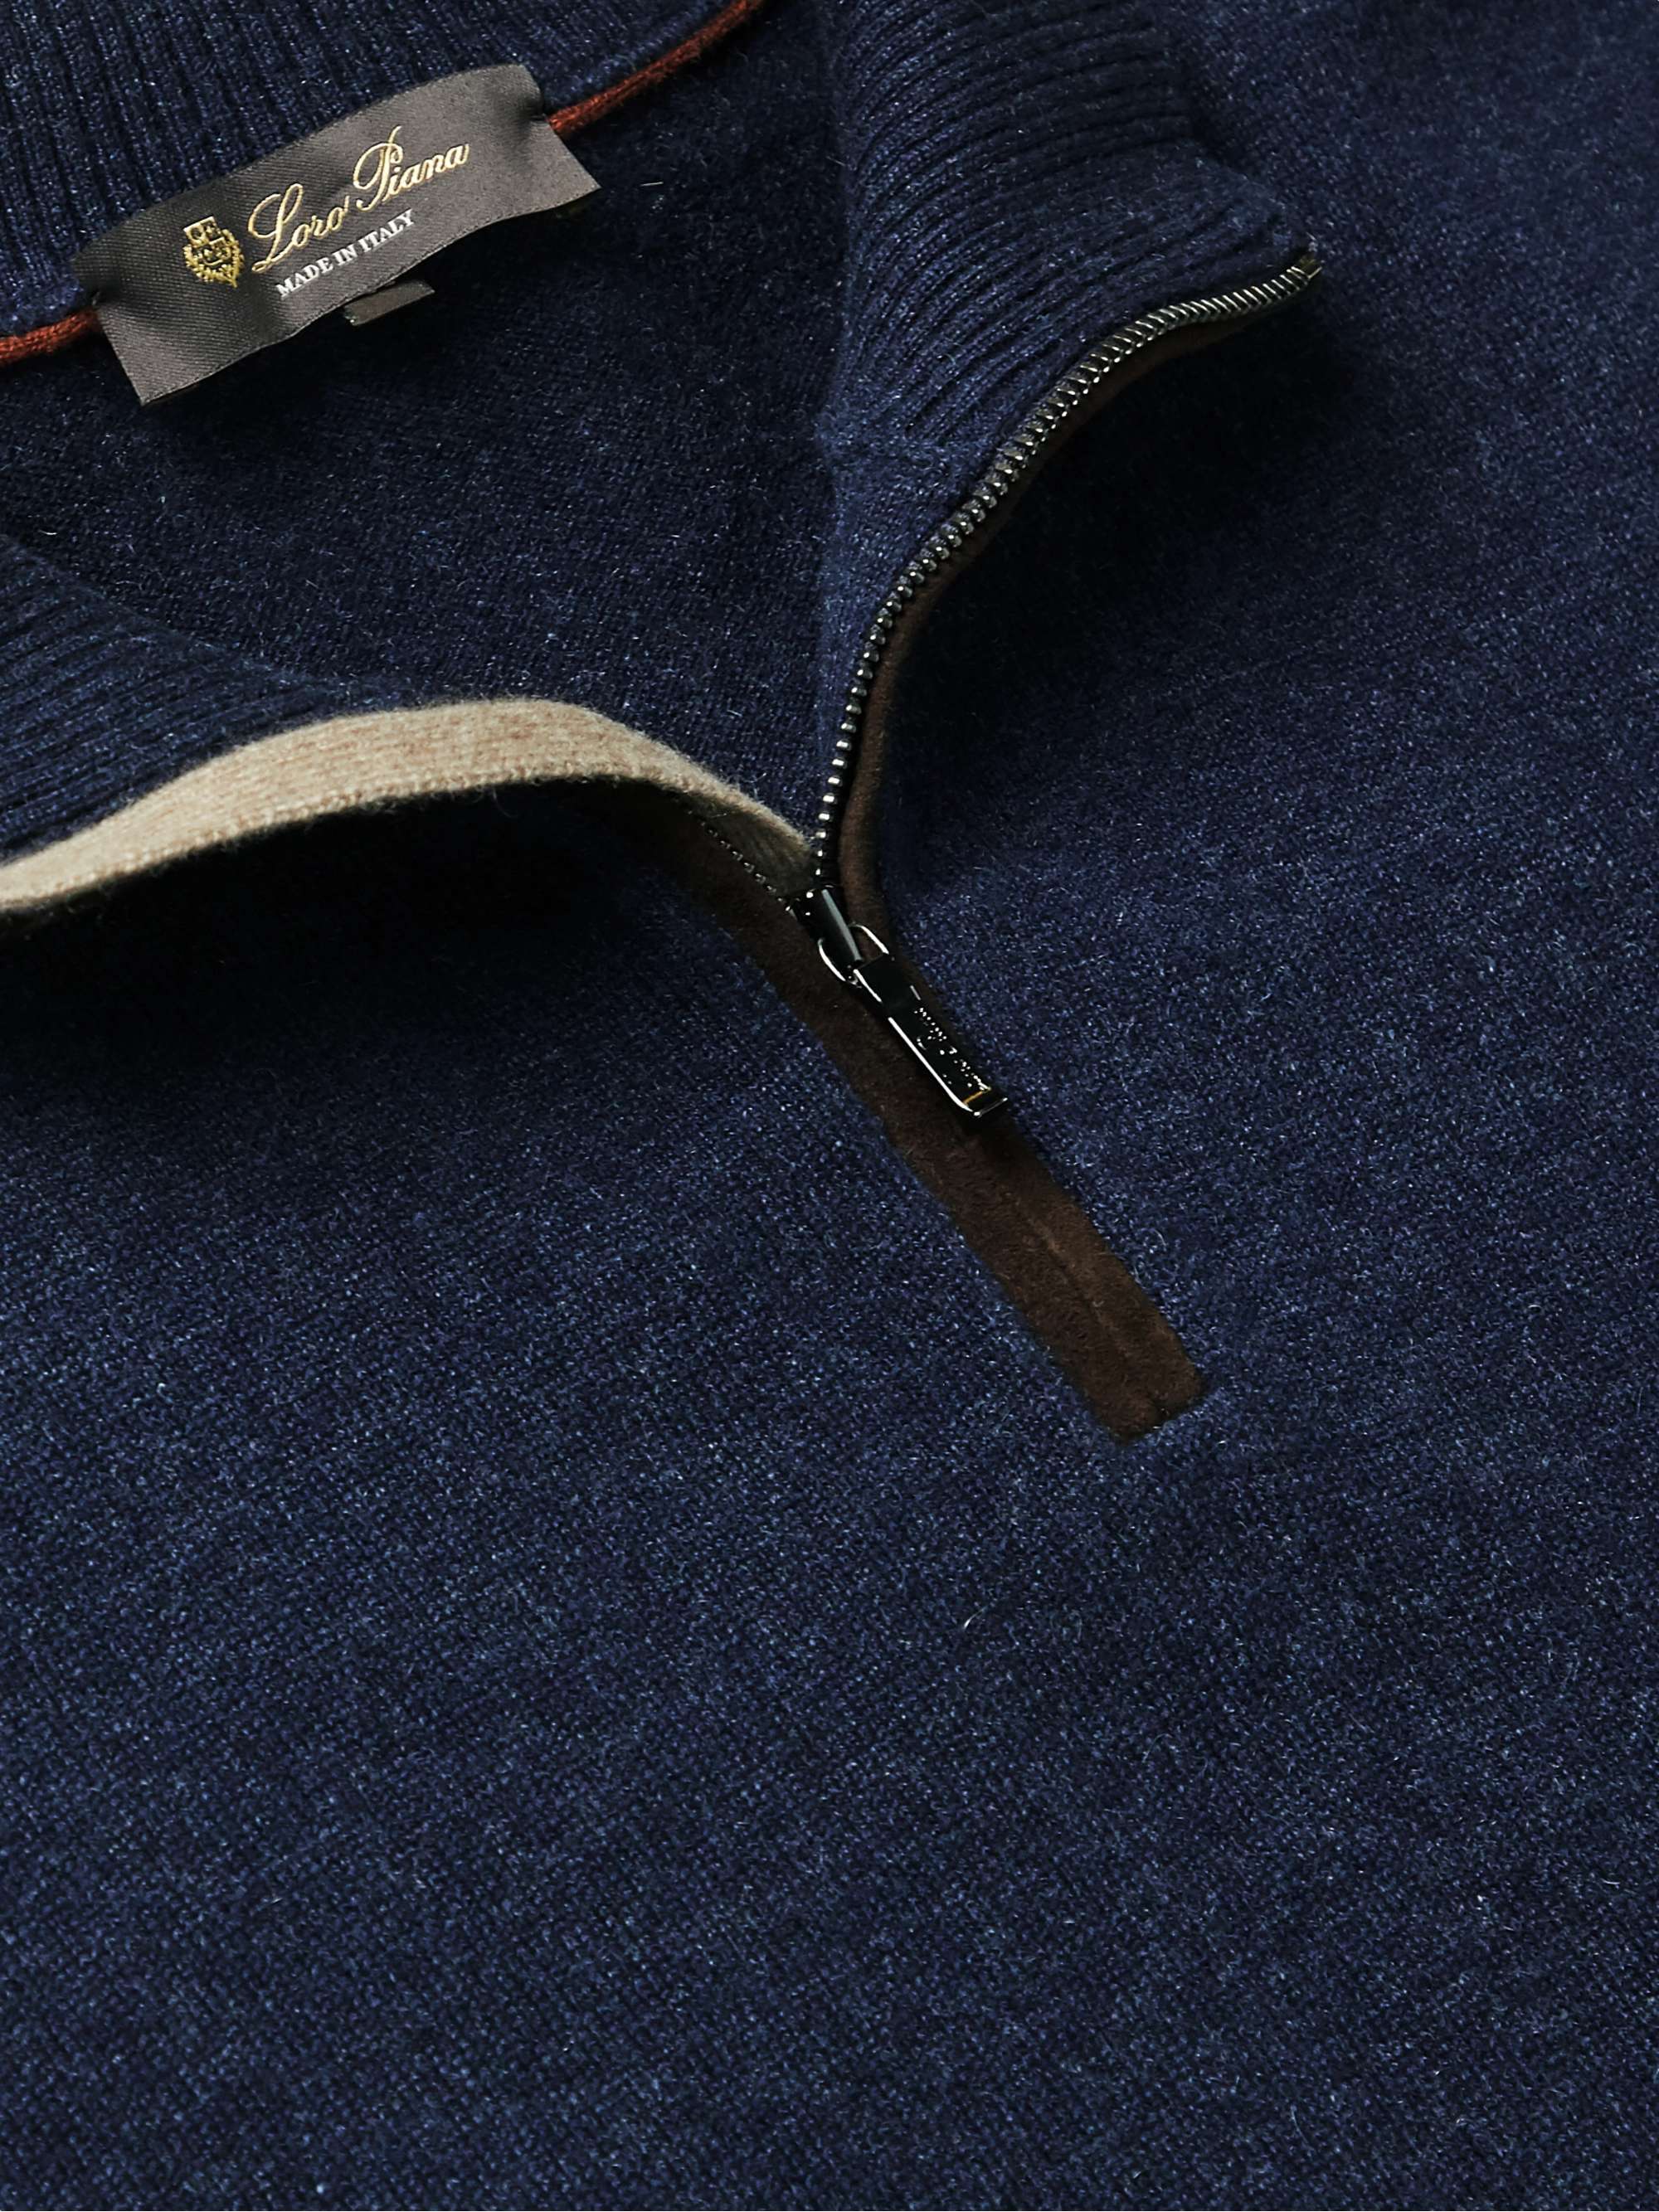 LORO PIANA Suede-Trimmed Cashmere Half-Zip Sweater